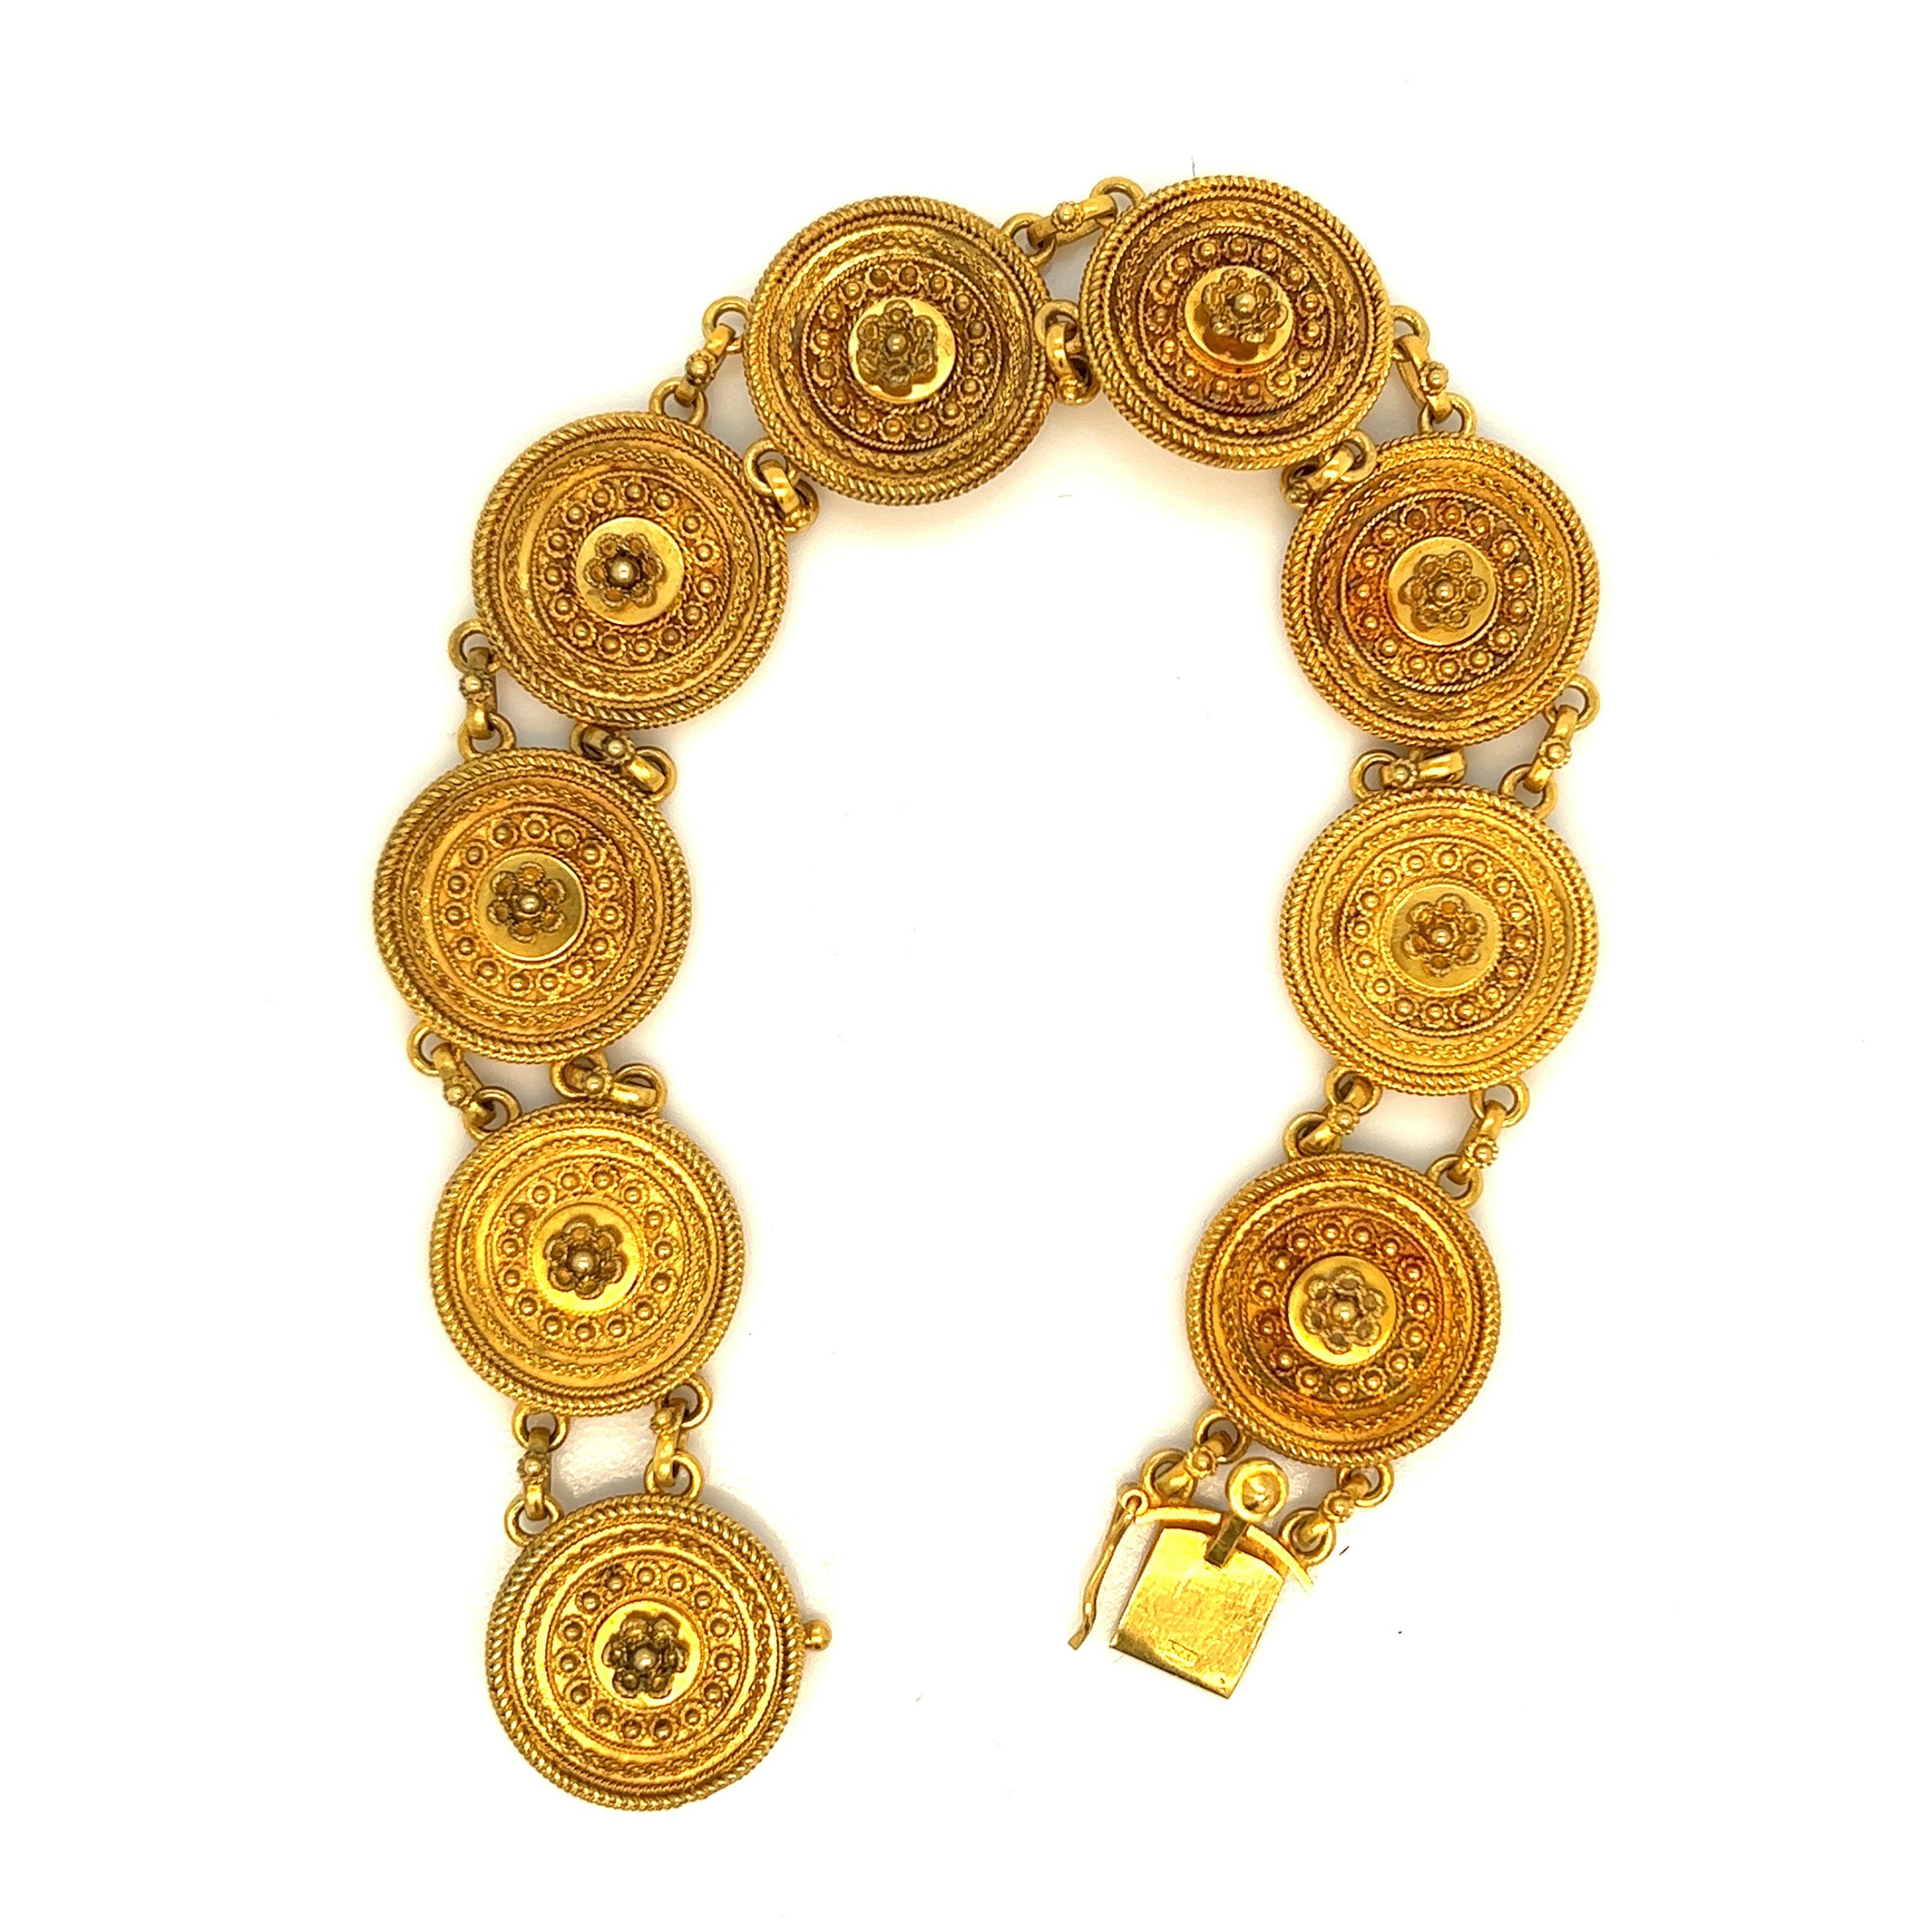 Castellani bracelet of beautiful filigree work

15 karat yellow gold; marked Castellani, 15ct

Size: width 0.63 inch, length 7.25 inches 
Total weight: 23.9 grams